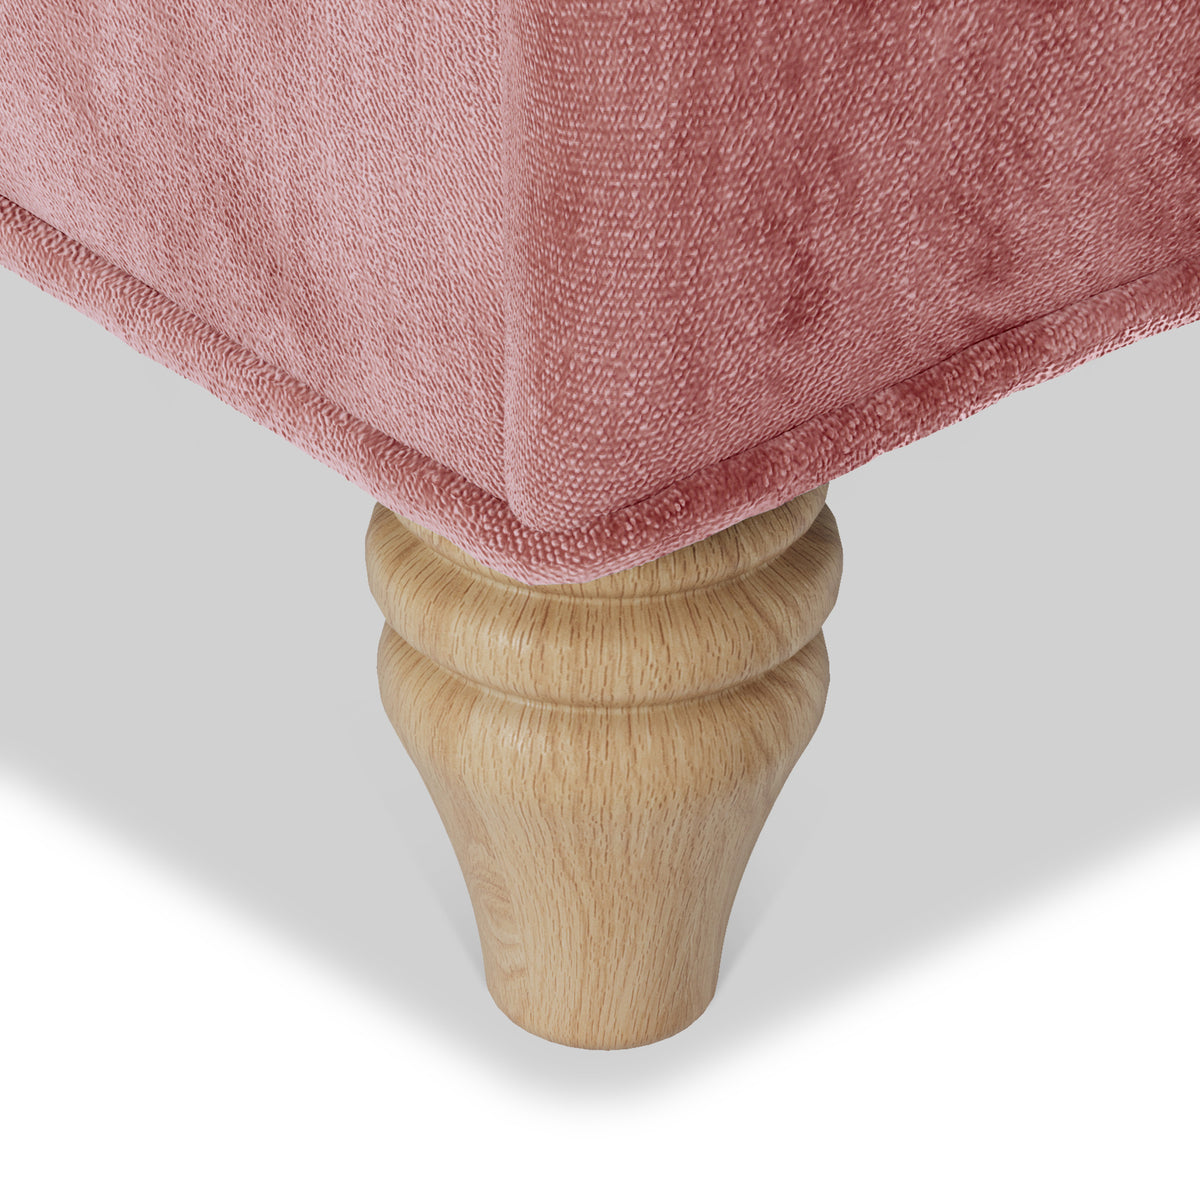 Arthur Plum Pink 2 Seater Sofa from Roseland Furniture